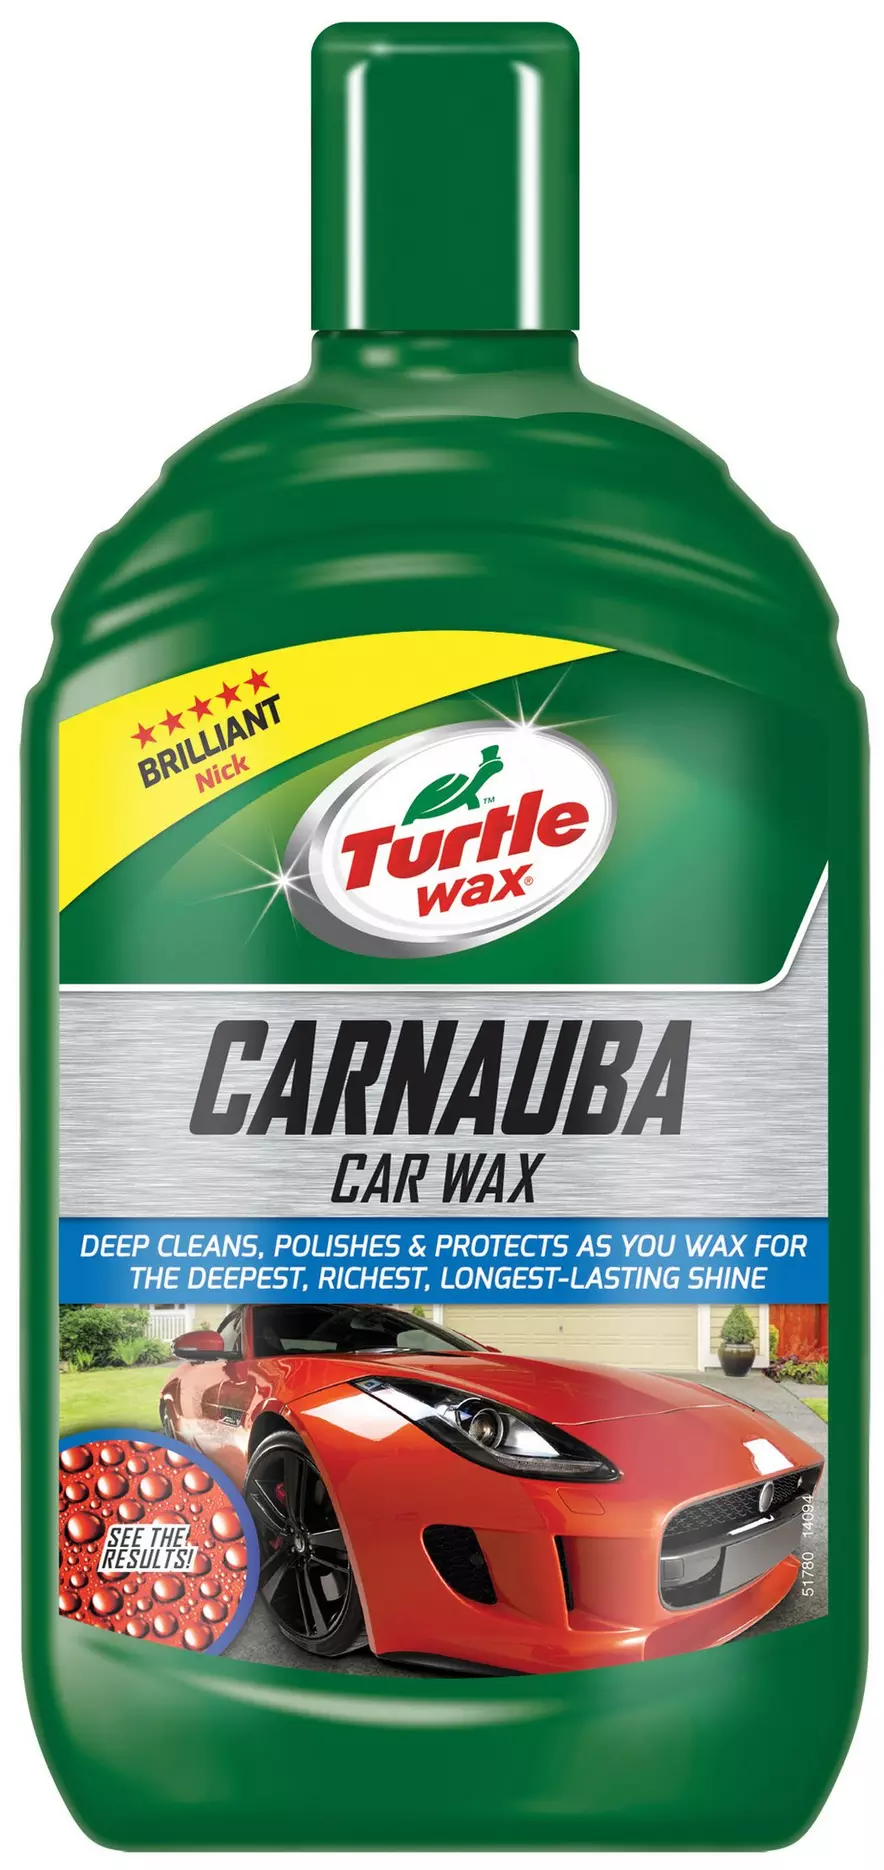 Turtle Wax- 500Ml Original Liquid